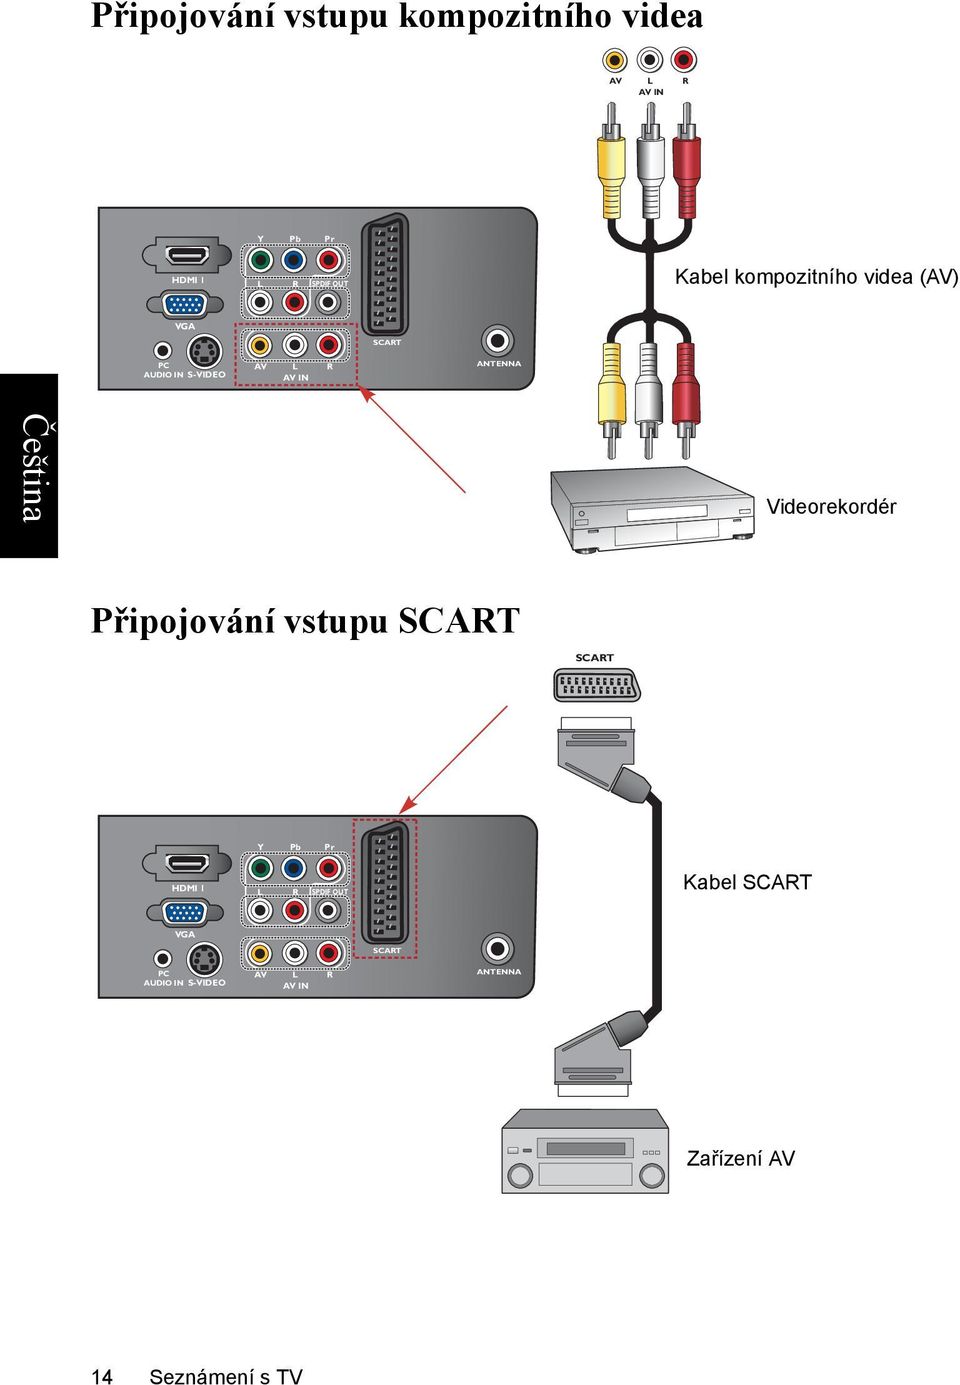 Videorekordér Připojování vstupu SCART SCART Y Pb Pr HDMI 1 L R SPDIF OUT Kabel